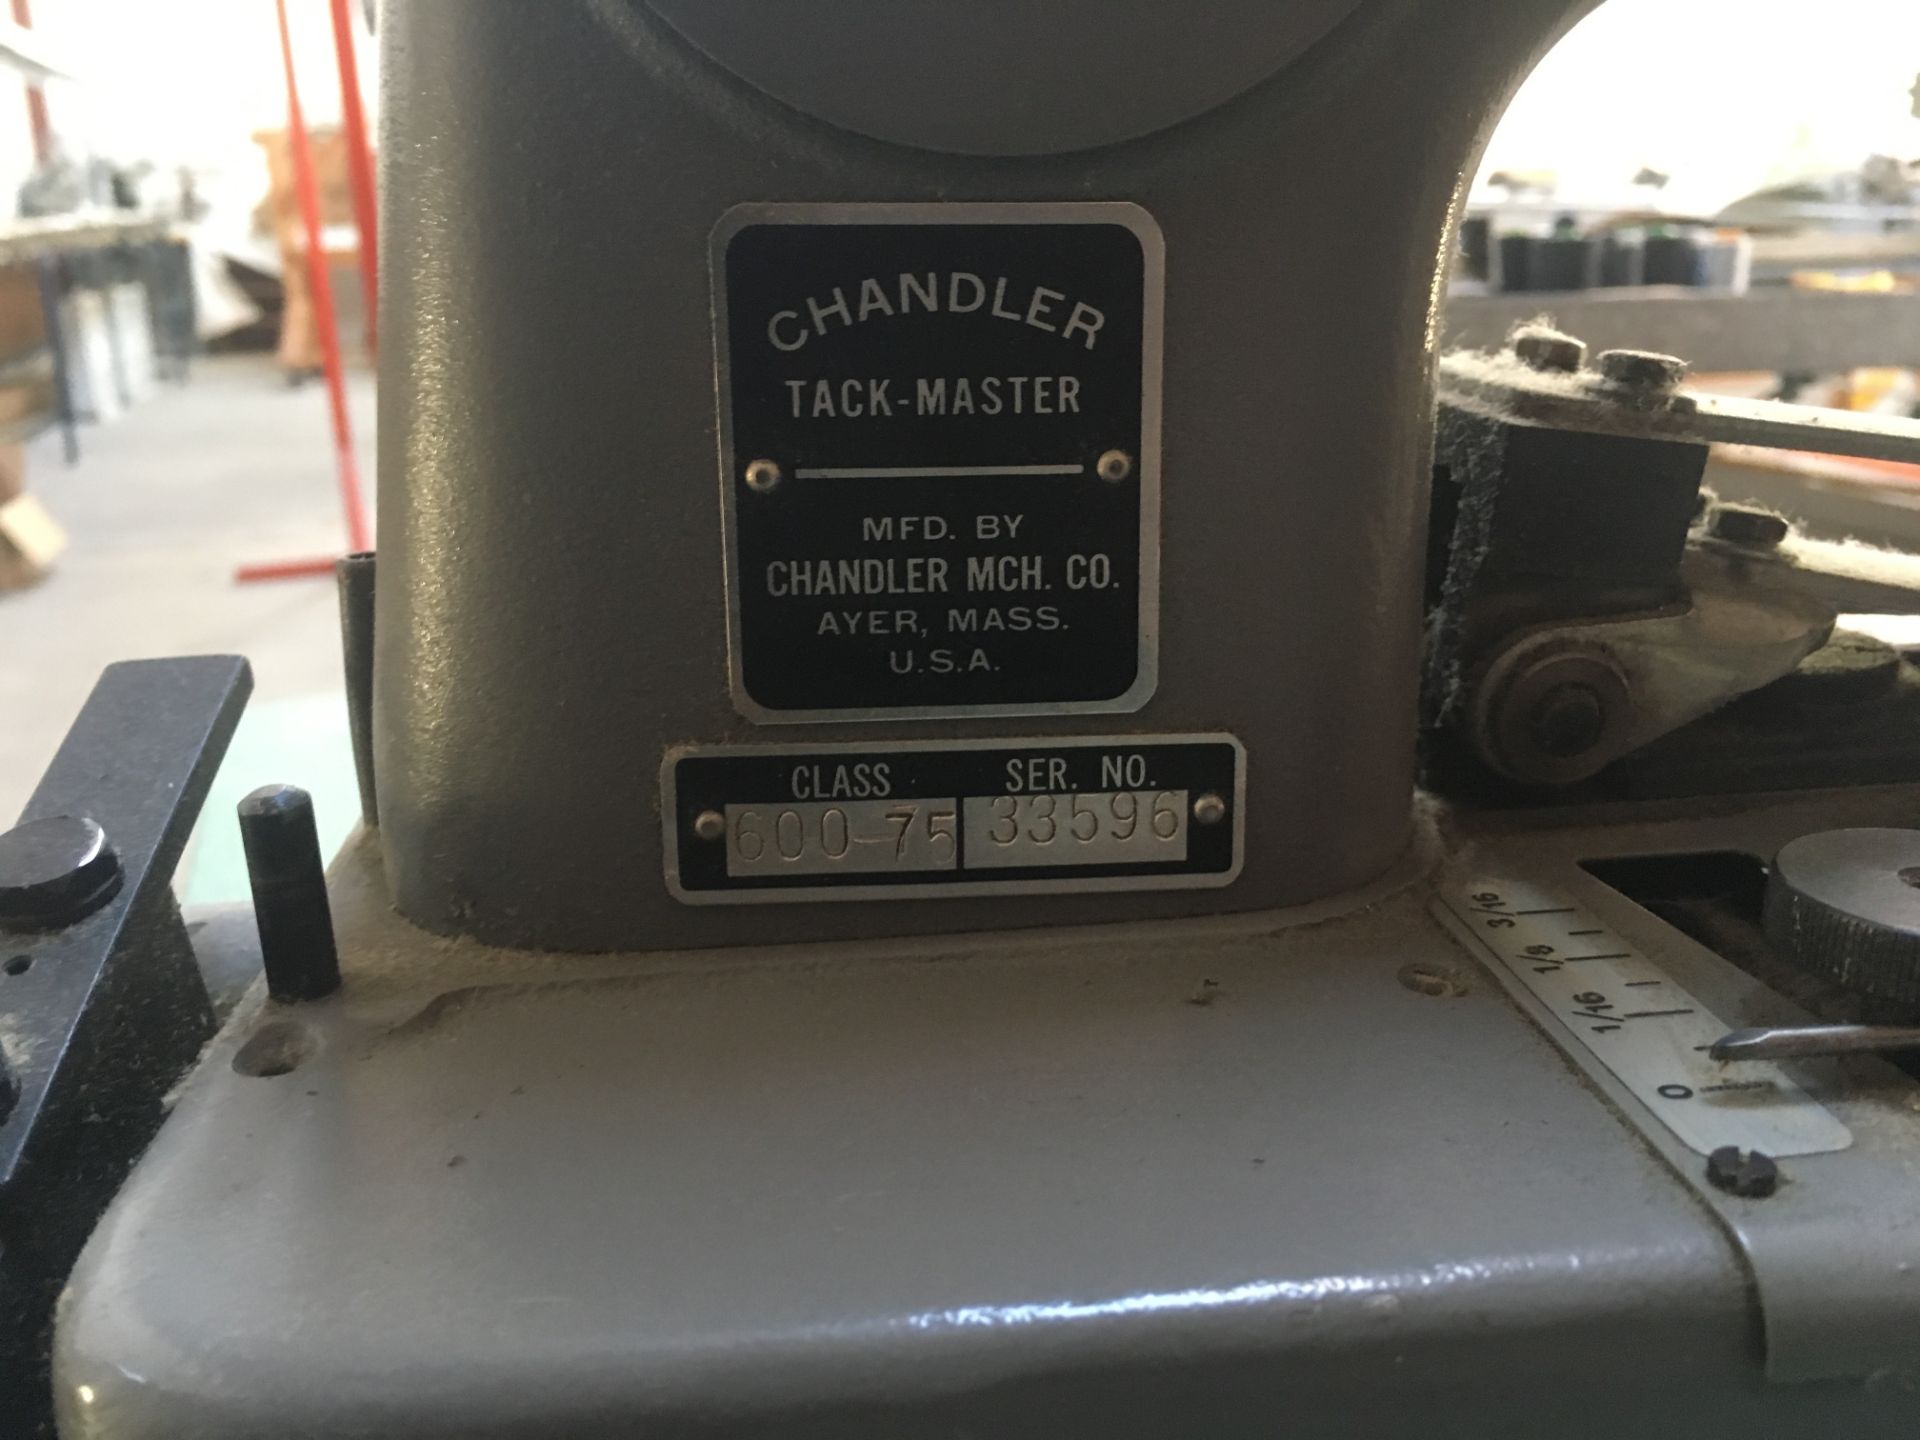 Chandler Tack-Master 600-75 bar tacker machine s/n 33596 - Image 2 of 3